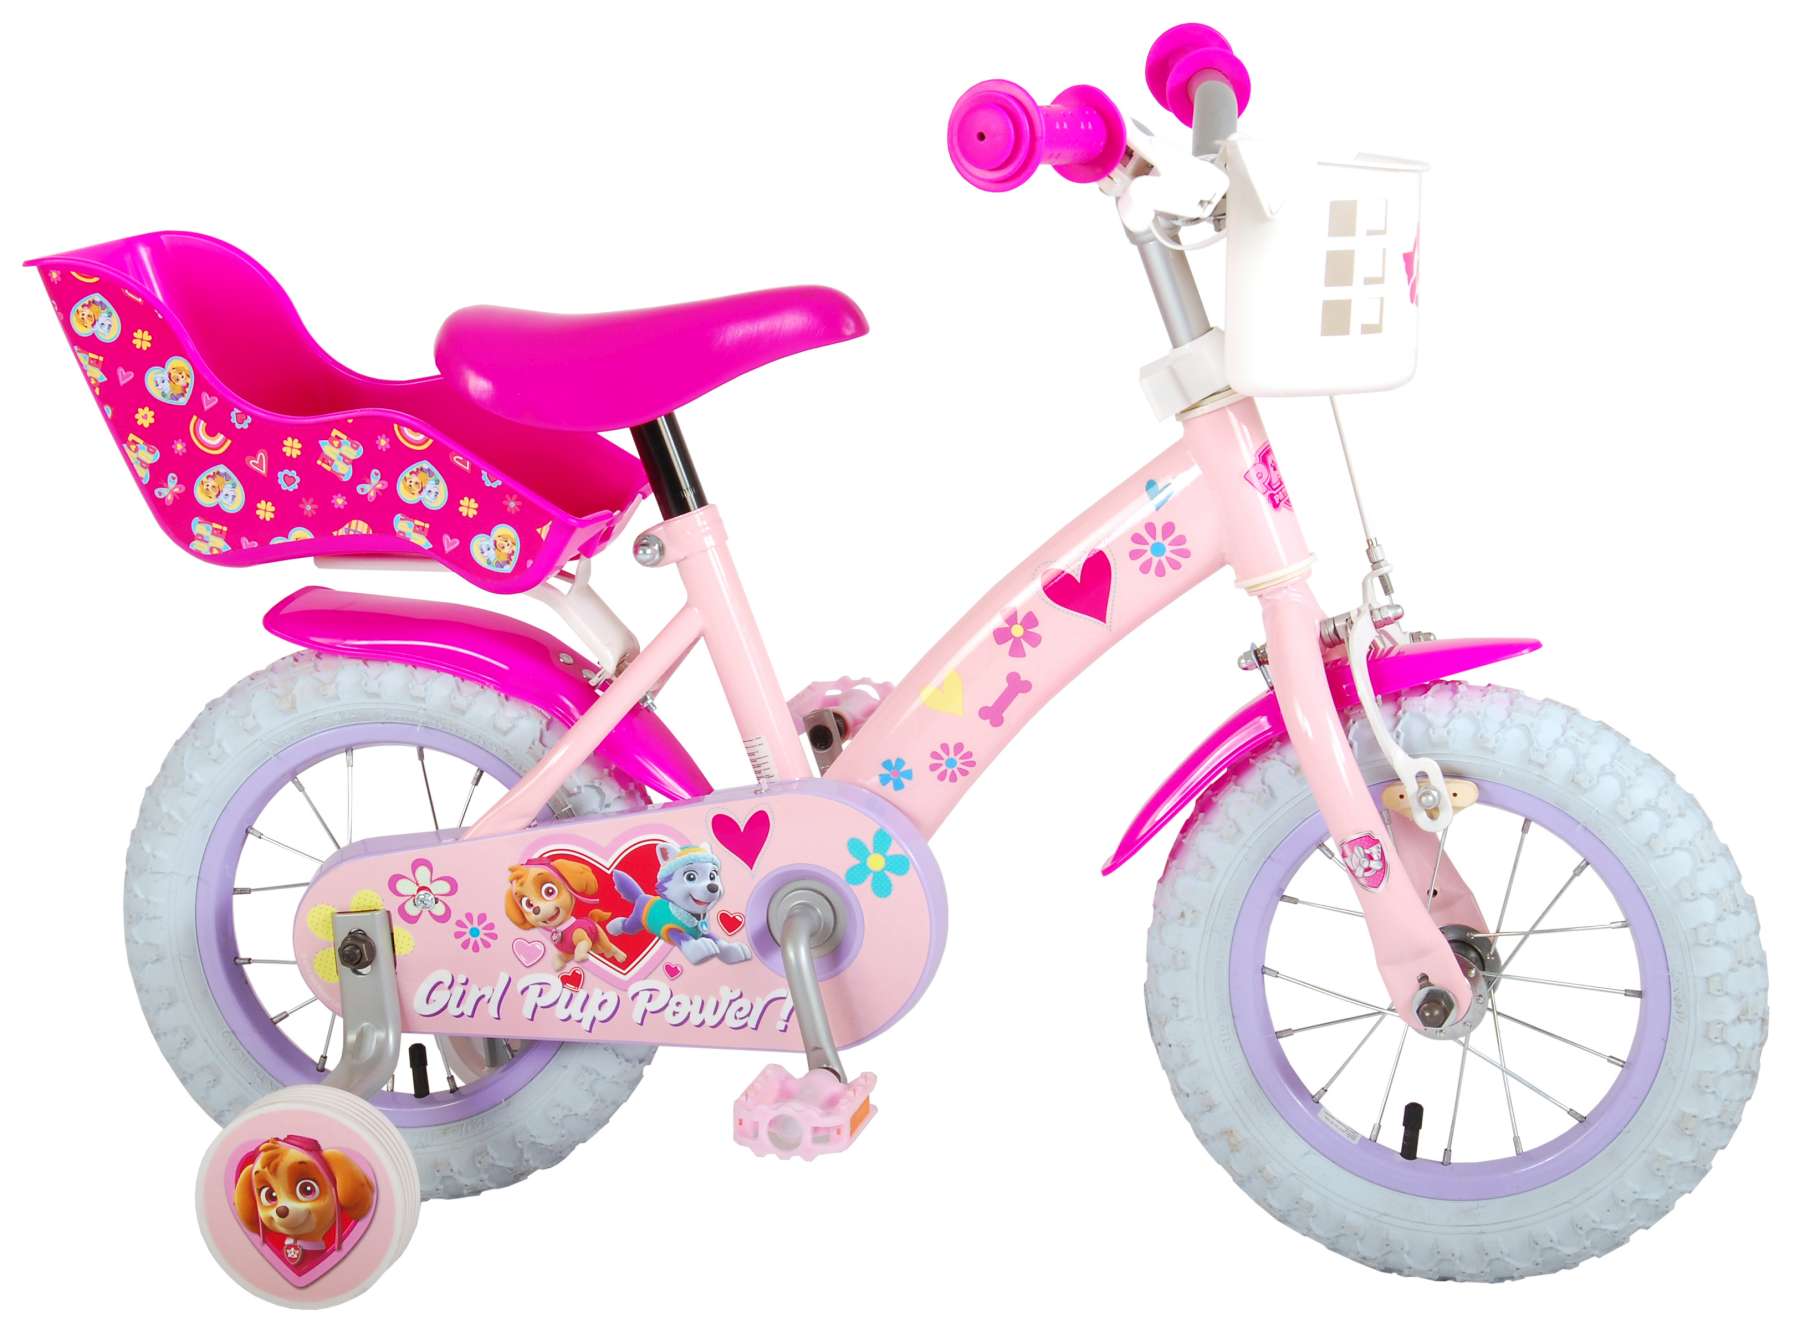 Kinderfahrrad Paw Patrol 12 Zoll mit Puppensitz Stützräder Kinder Fahrrad pink 